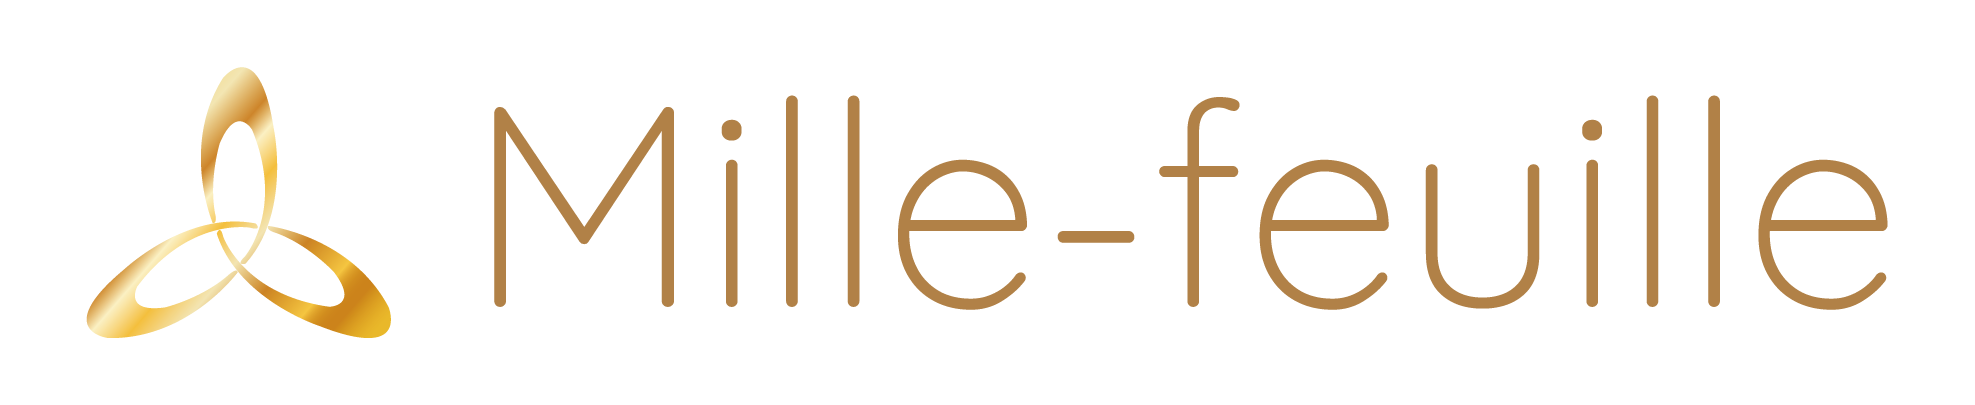 mille-feuille logo